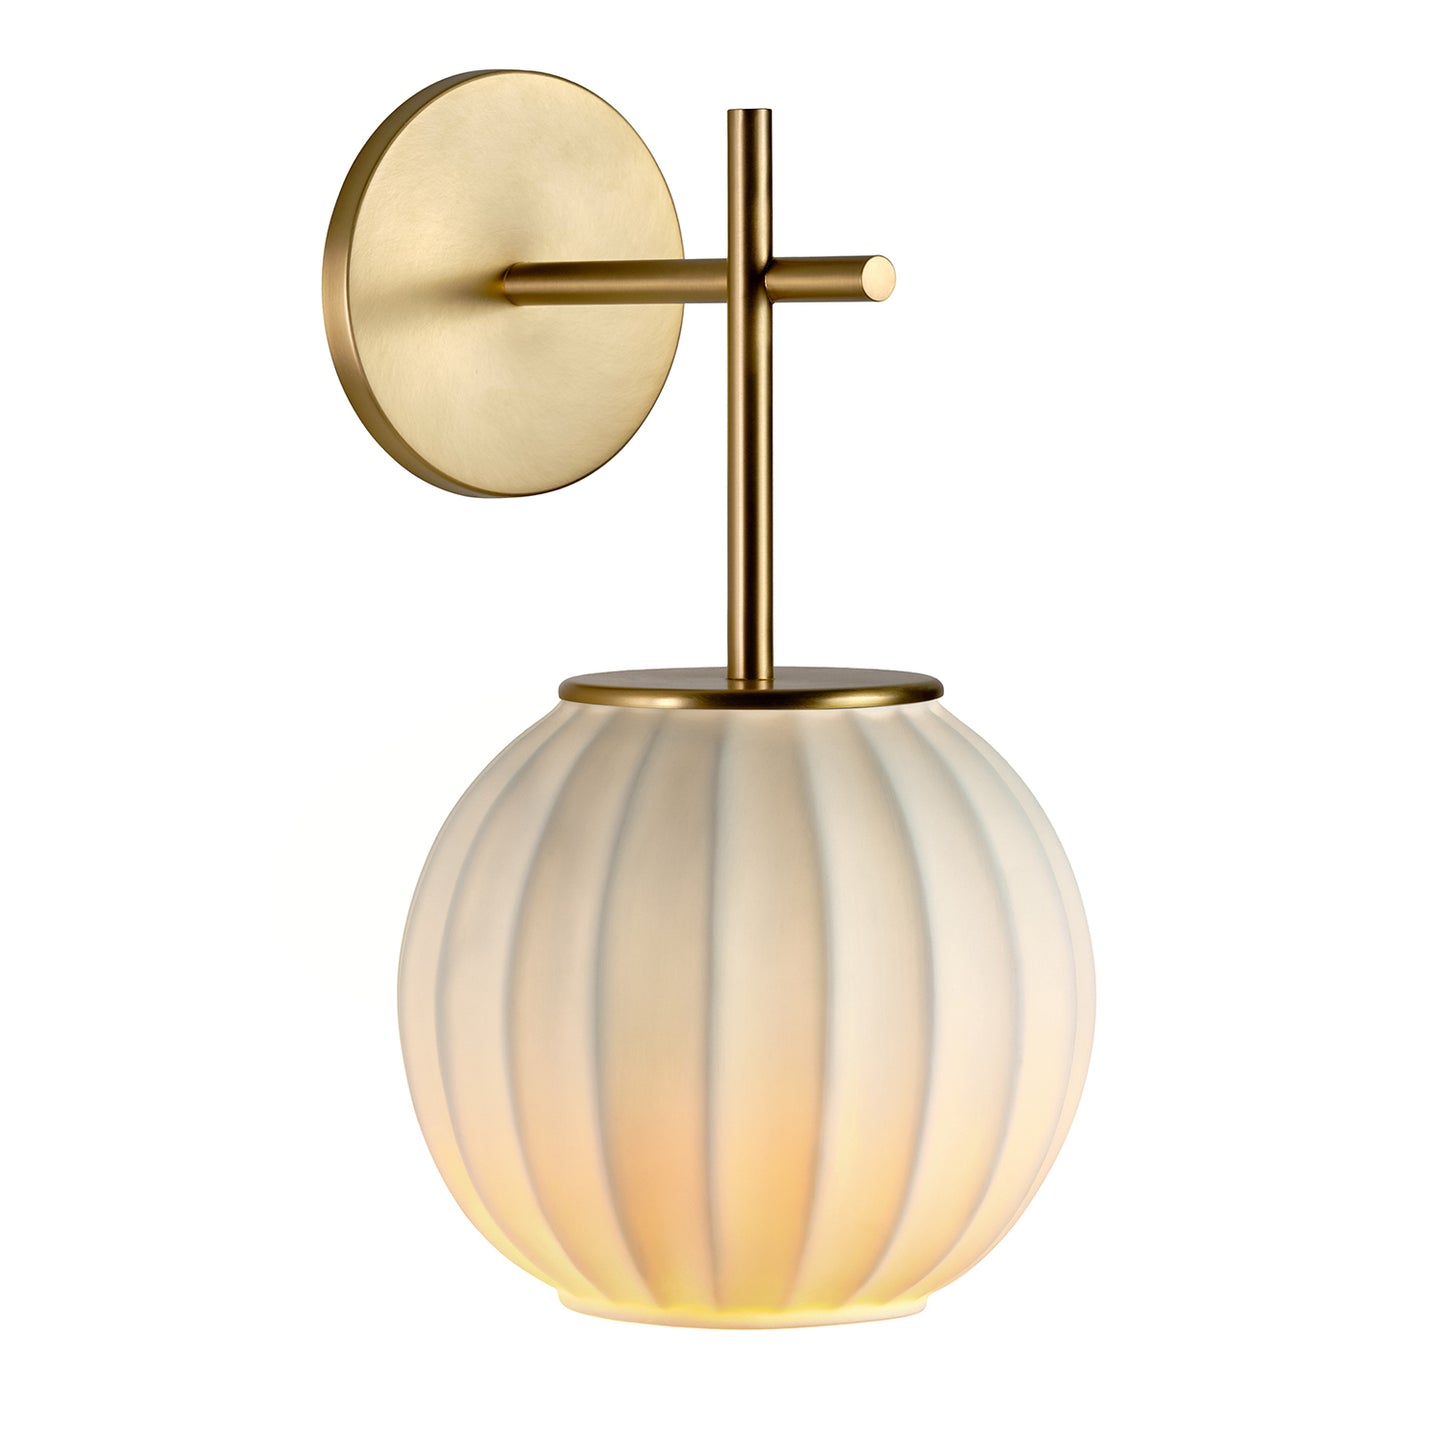 Elegant Porcelain Wall Lamp - Mei by Carpyen - Gold Finish